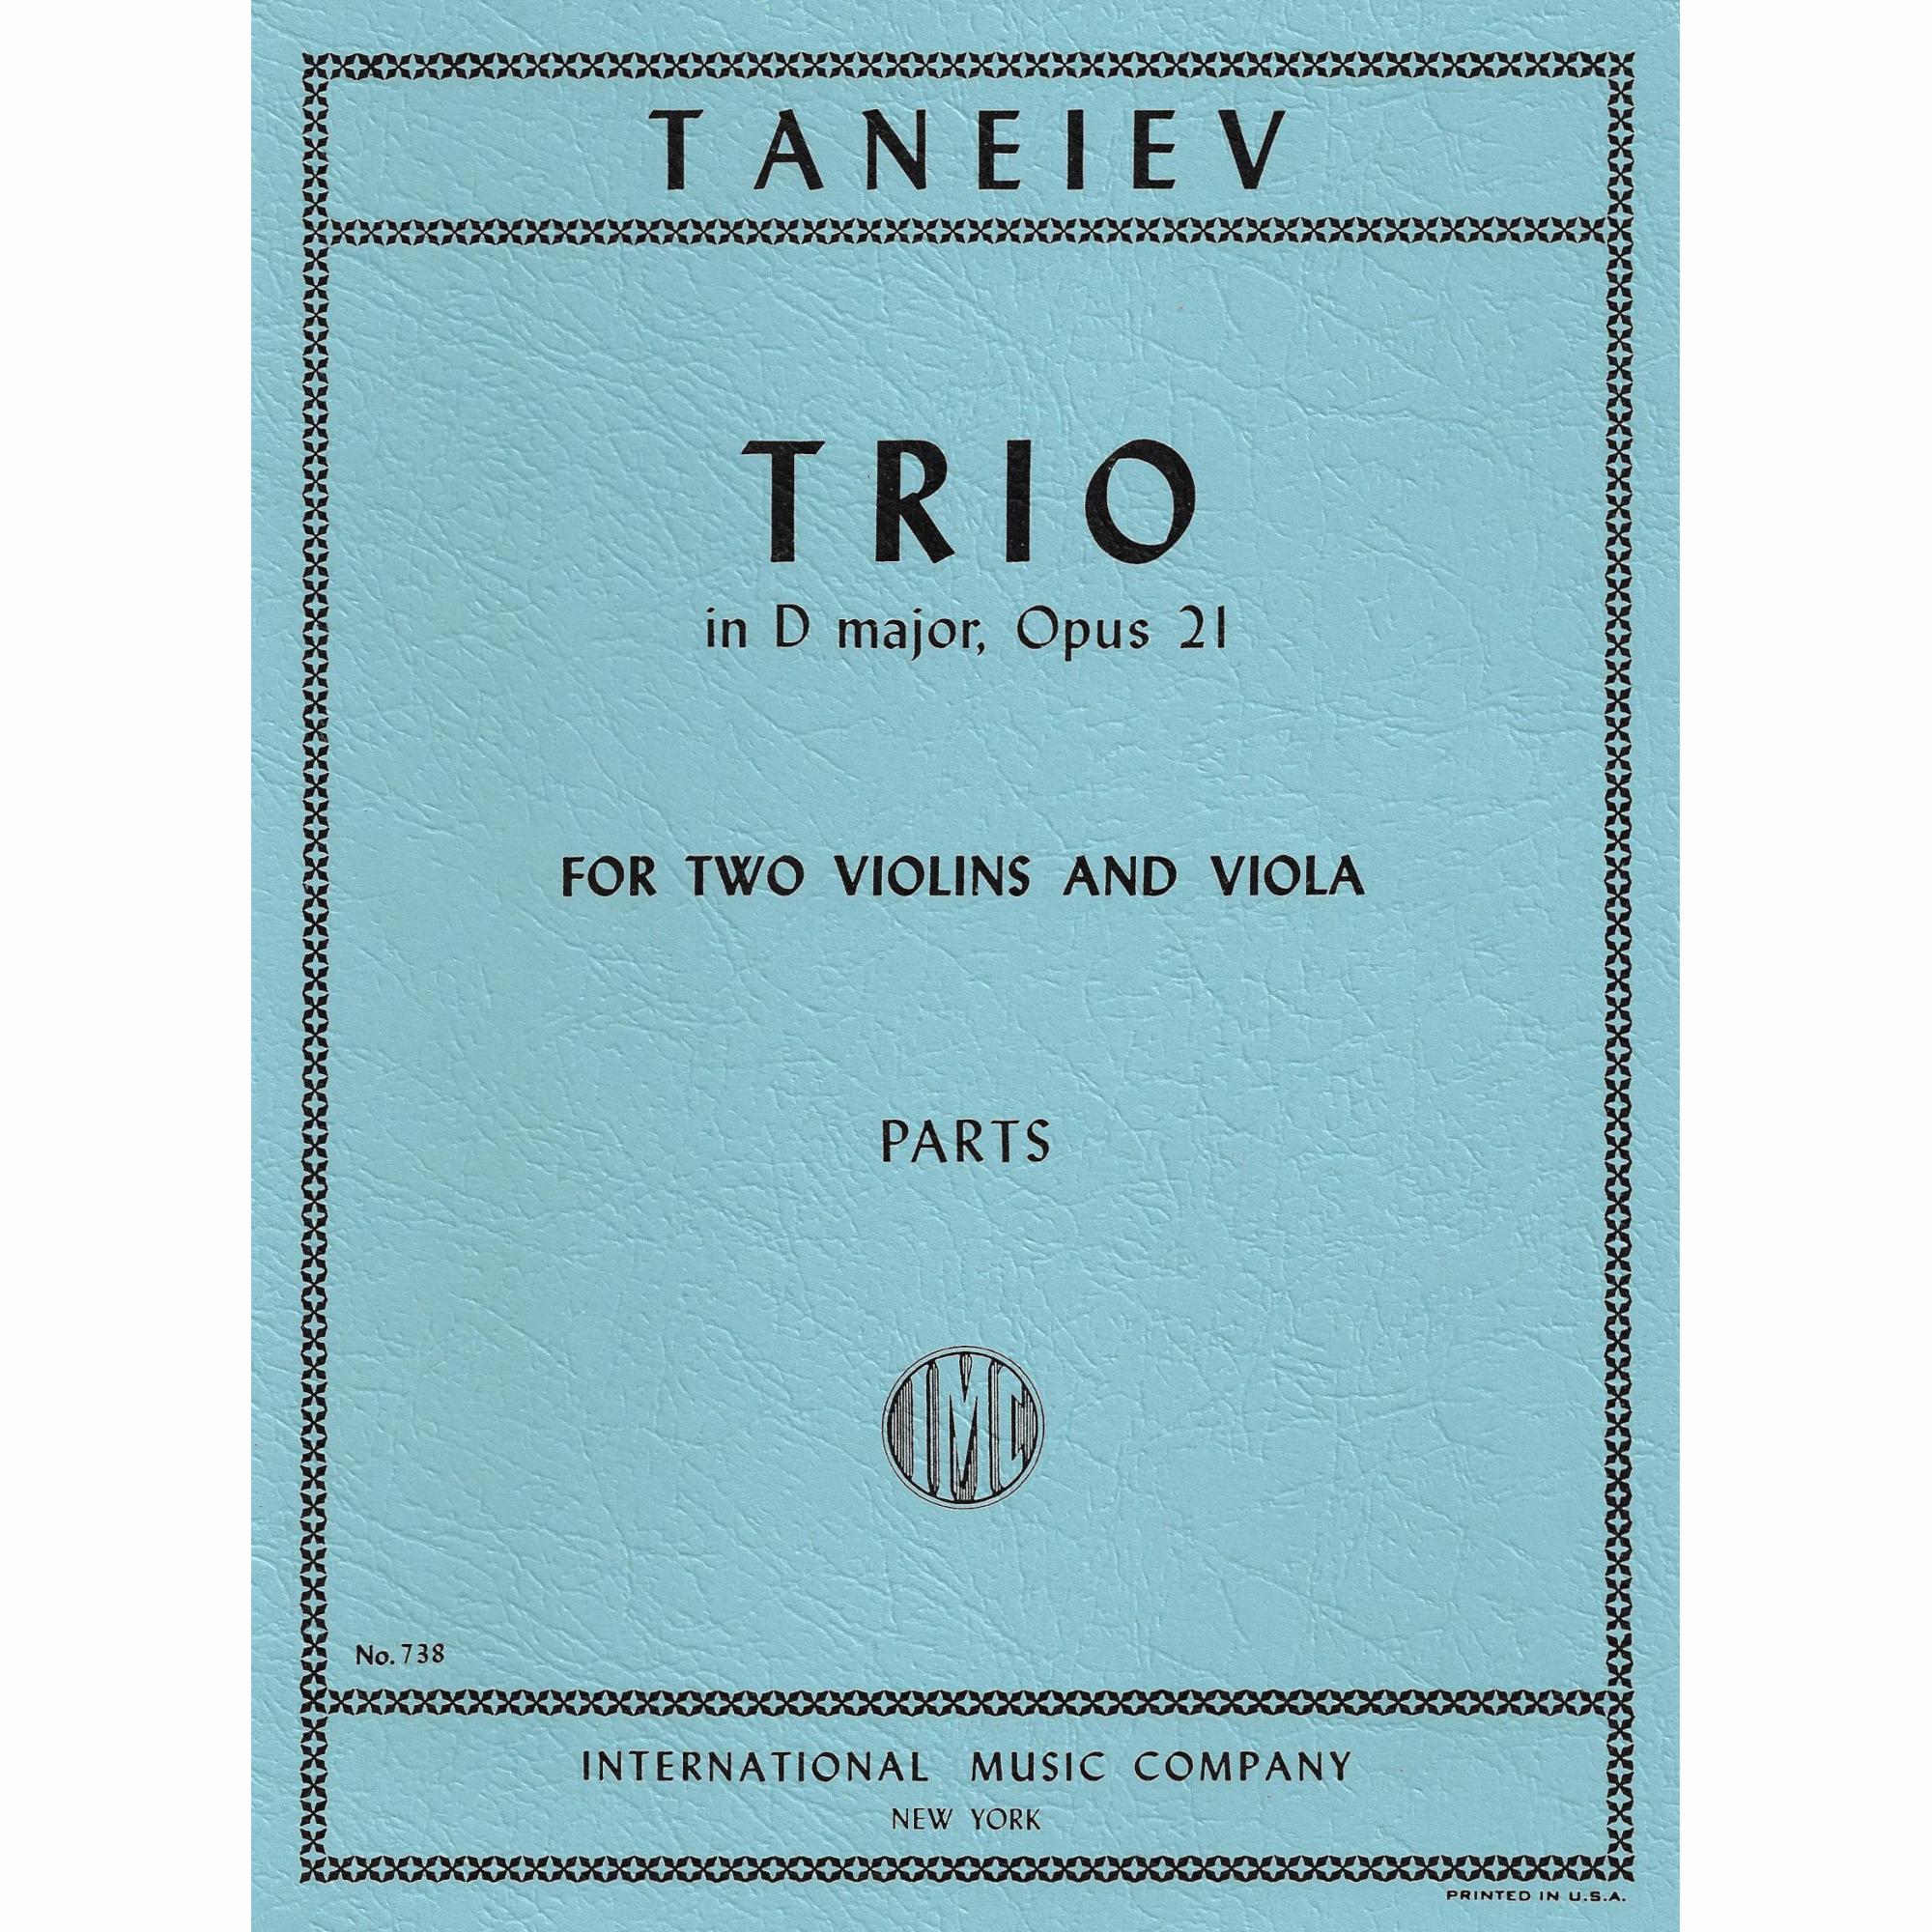 Taneyev -- Trio in D Major, Op. 21 for Two Violins and Viola